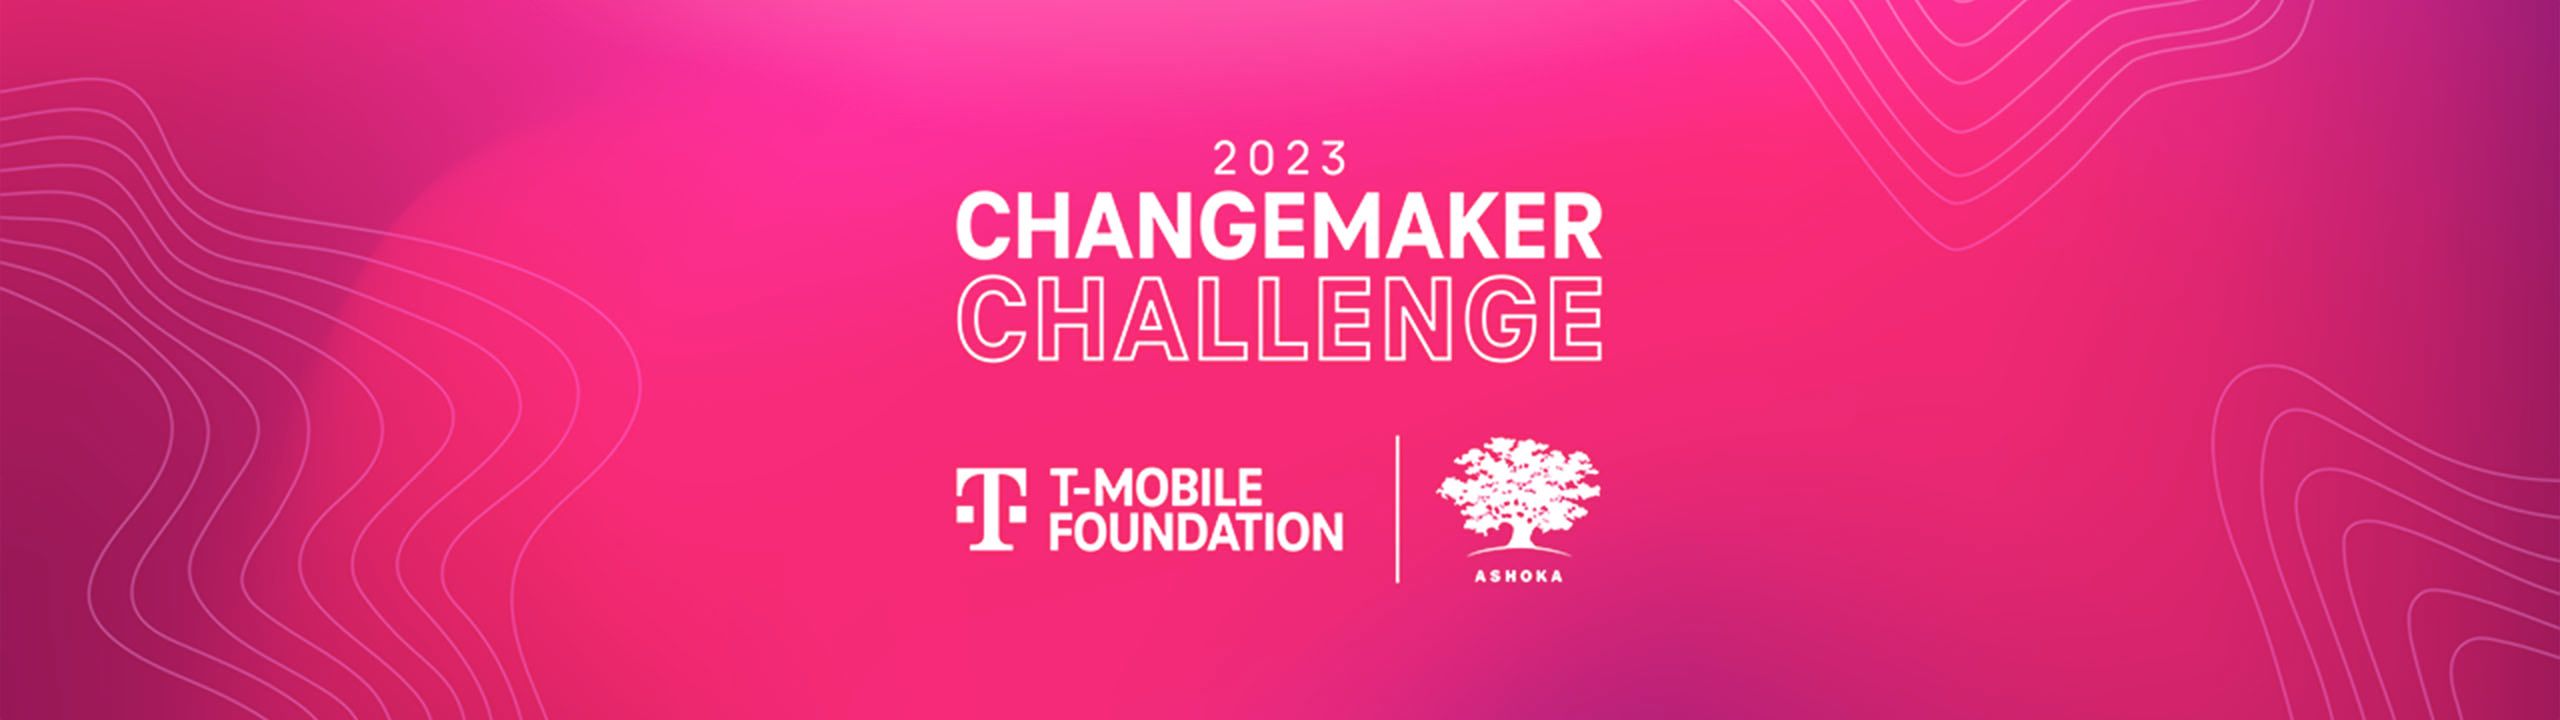 2023 Changemaker Challenge logo, T-Mobile Foundation logo, Ashoka logo.